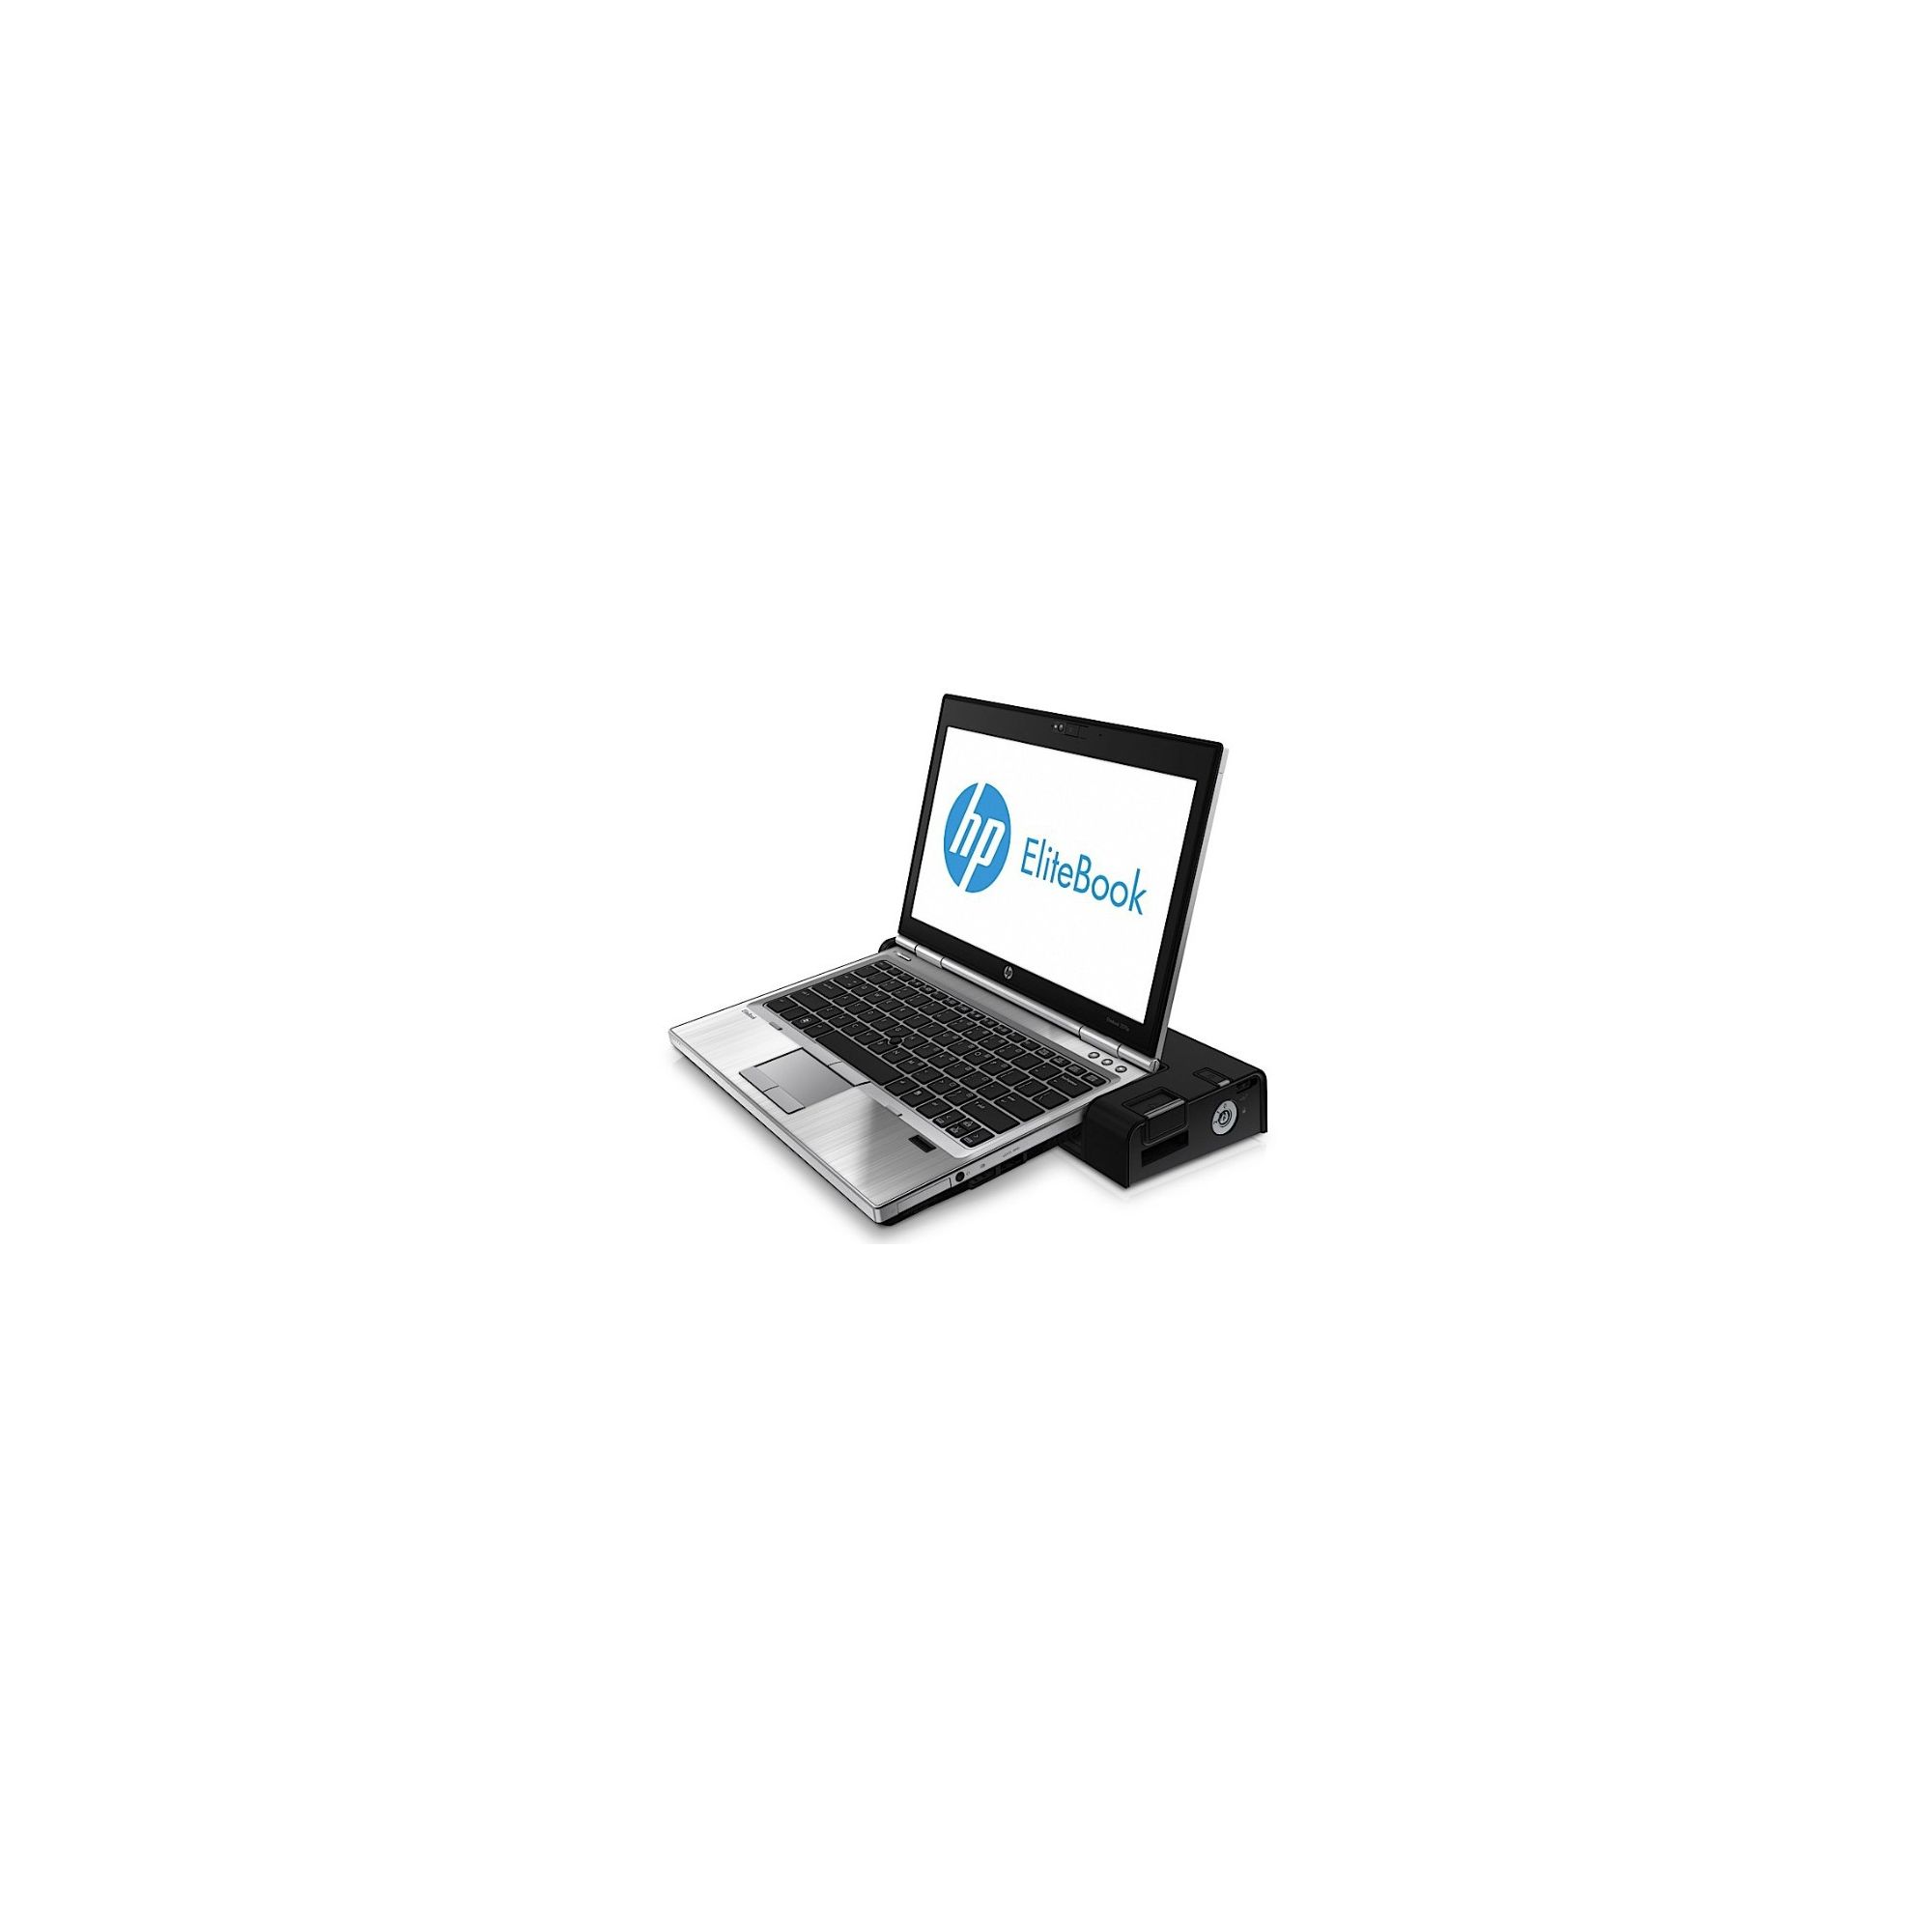 HP EliteBook 2570p (12.5 inch) Notebook Core i7 (3520M) 2.9GHz 4GB 500GB DVD±RW SM DL WLAN BT Webcam Windows 7 Pro 64-bit (HD Graphics 4000)